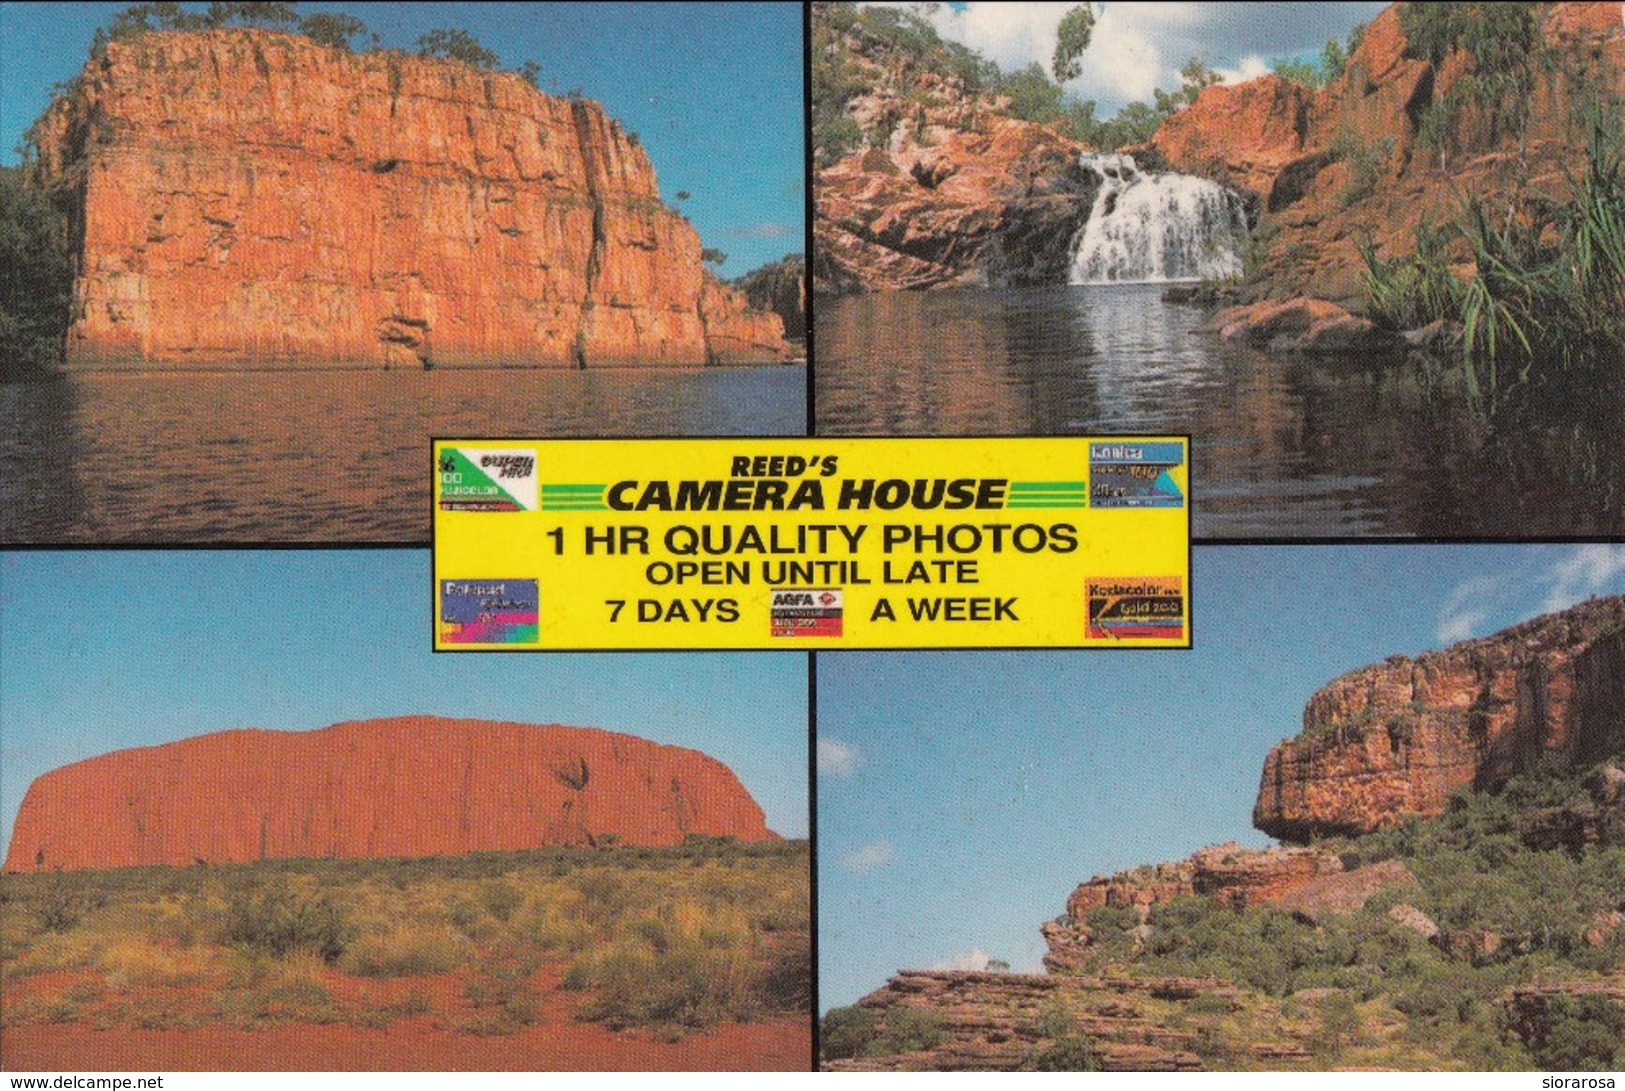 Australia - Ayers Rock - Edith Falls - Nourlangie Rock Kakadu - Jedda's Leap, Katherine Gorge - Alice Springs